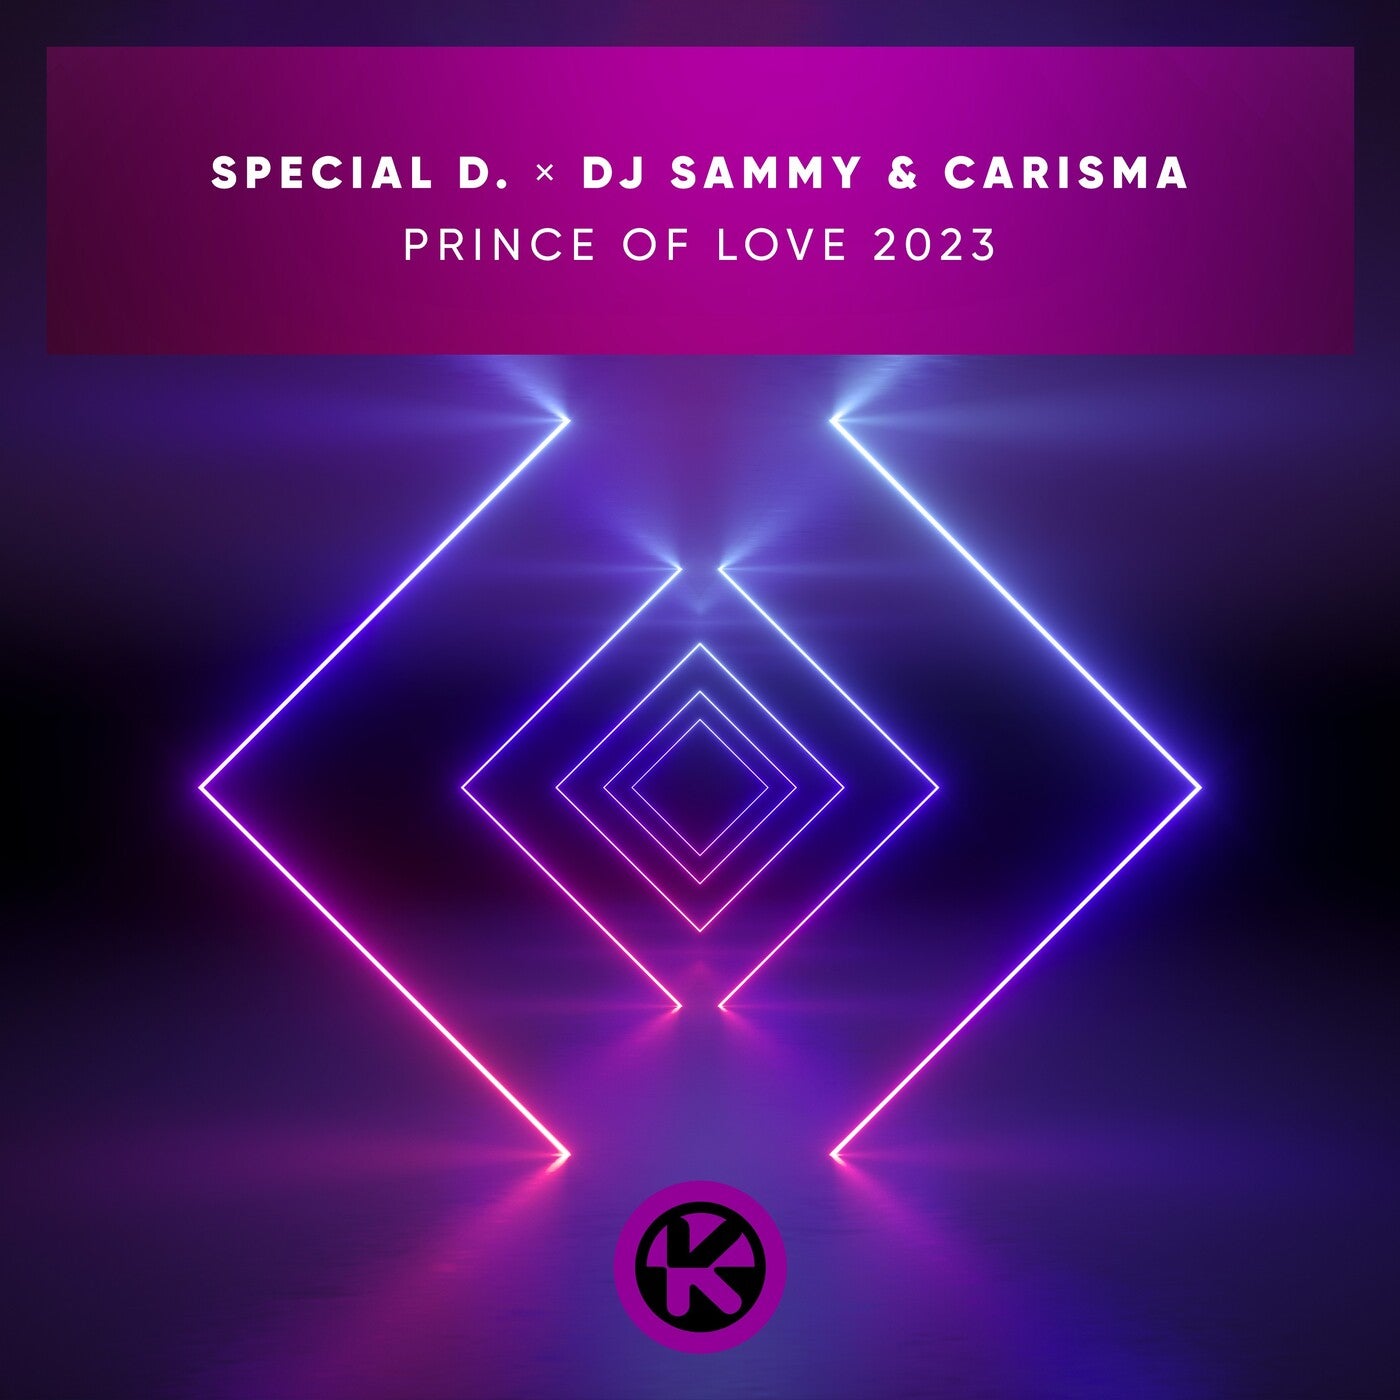 Prince of Love 2023